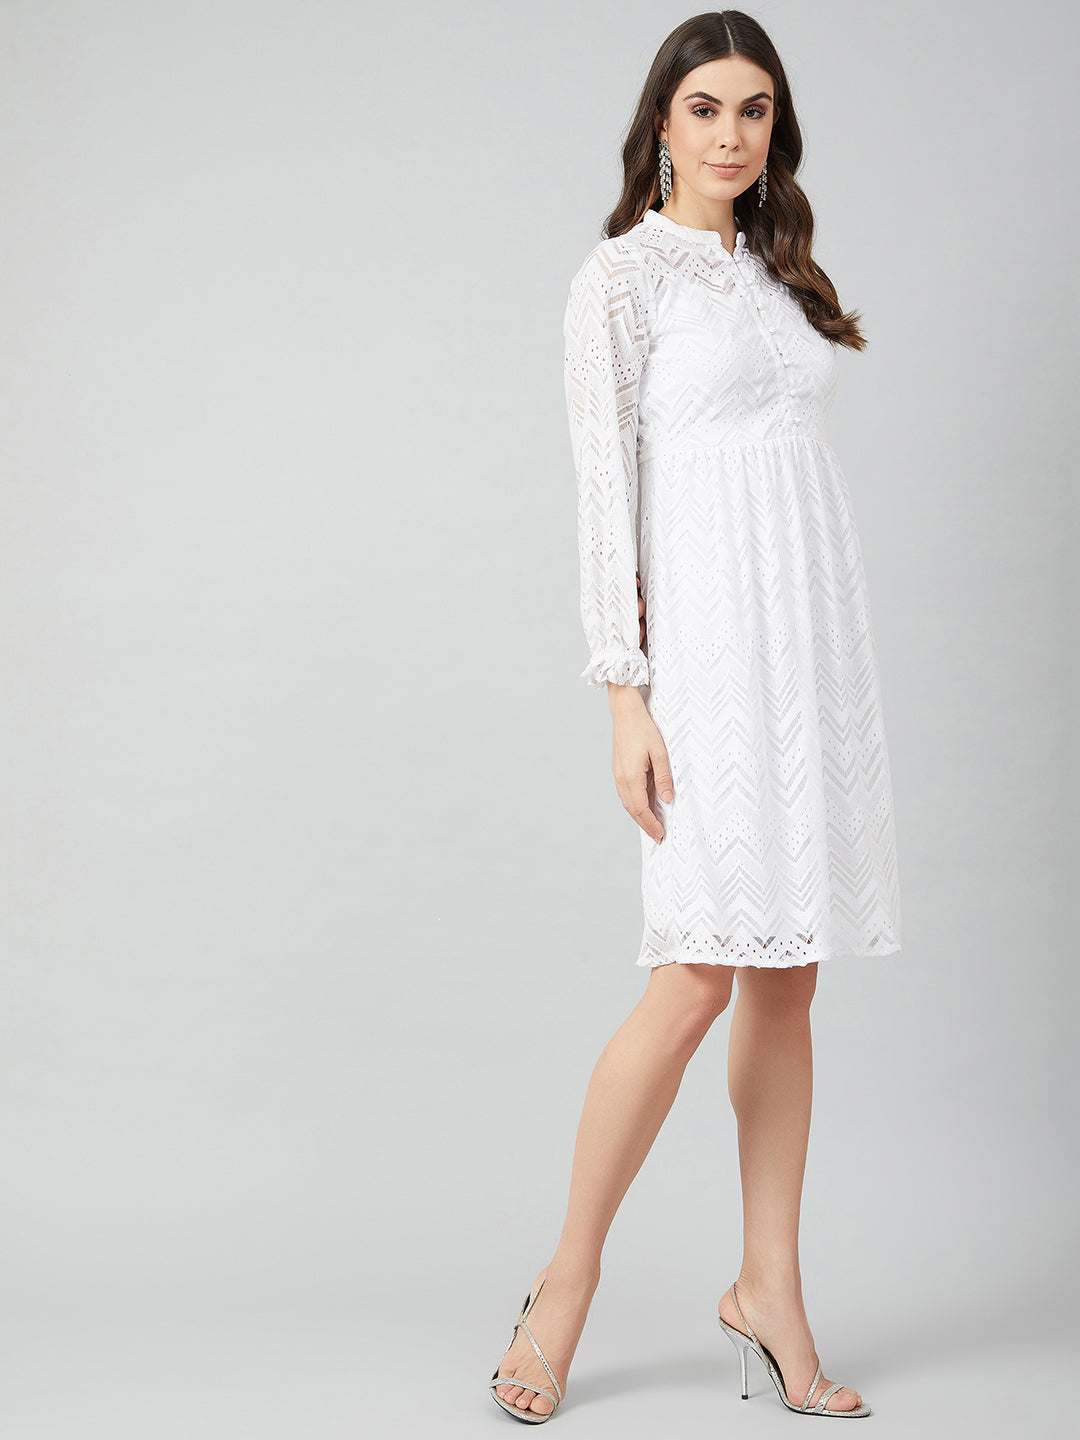 Athena Women White Self Design Fit and Flare Dress - Athena Lifestyle